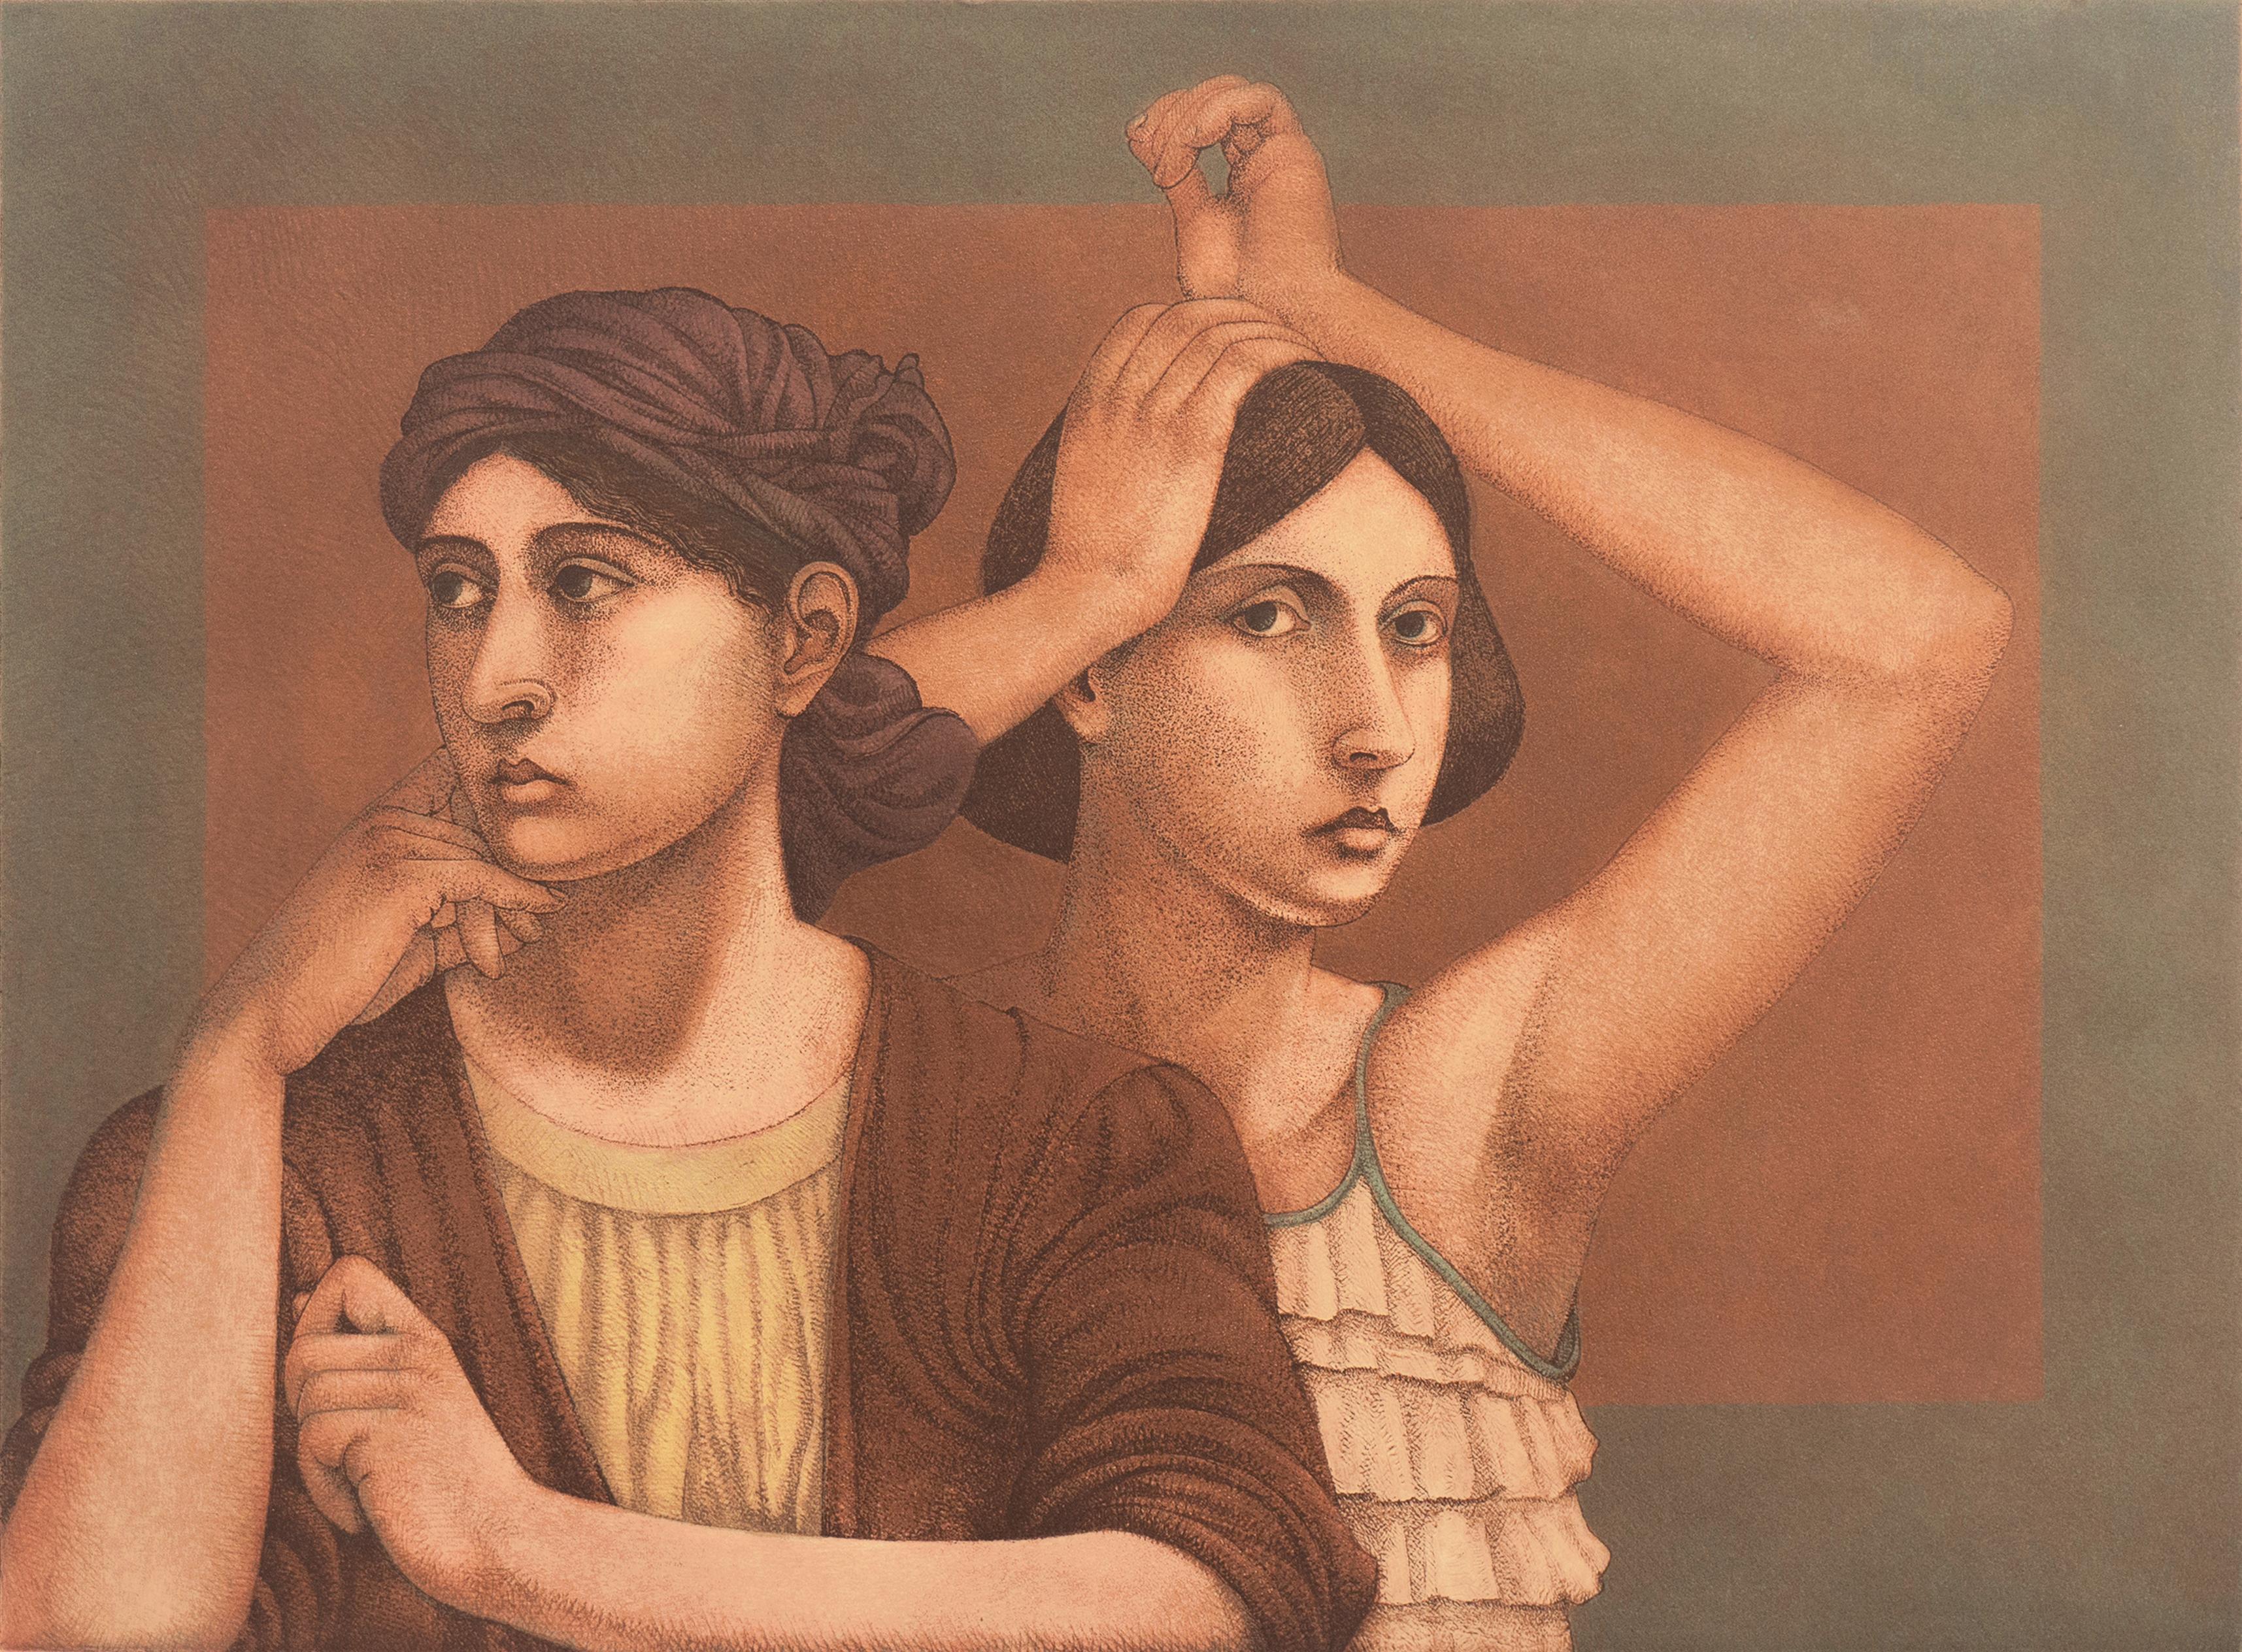 Alan Feltus Figurative Print - 'Two Women', Yale, Cooper Union, Prix de Rome, Tyler School of Art, Smithsonian